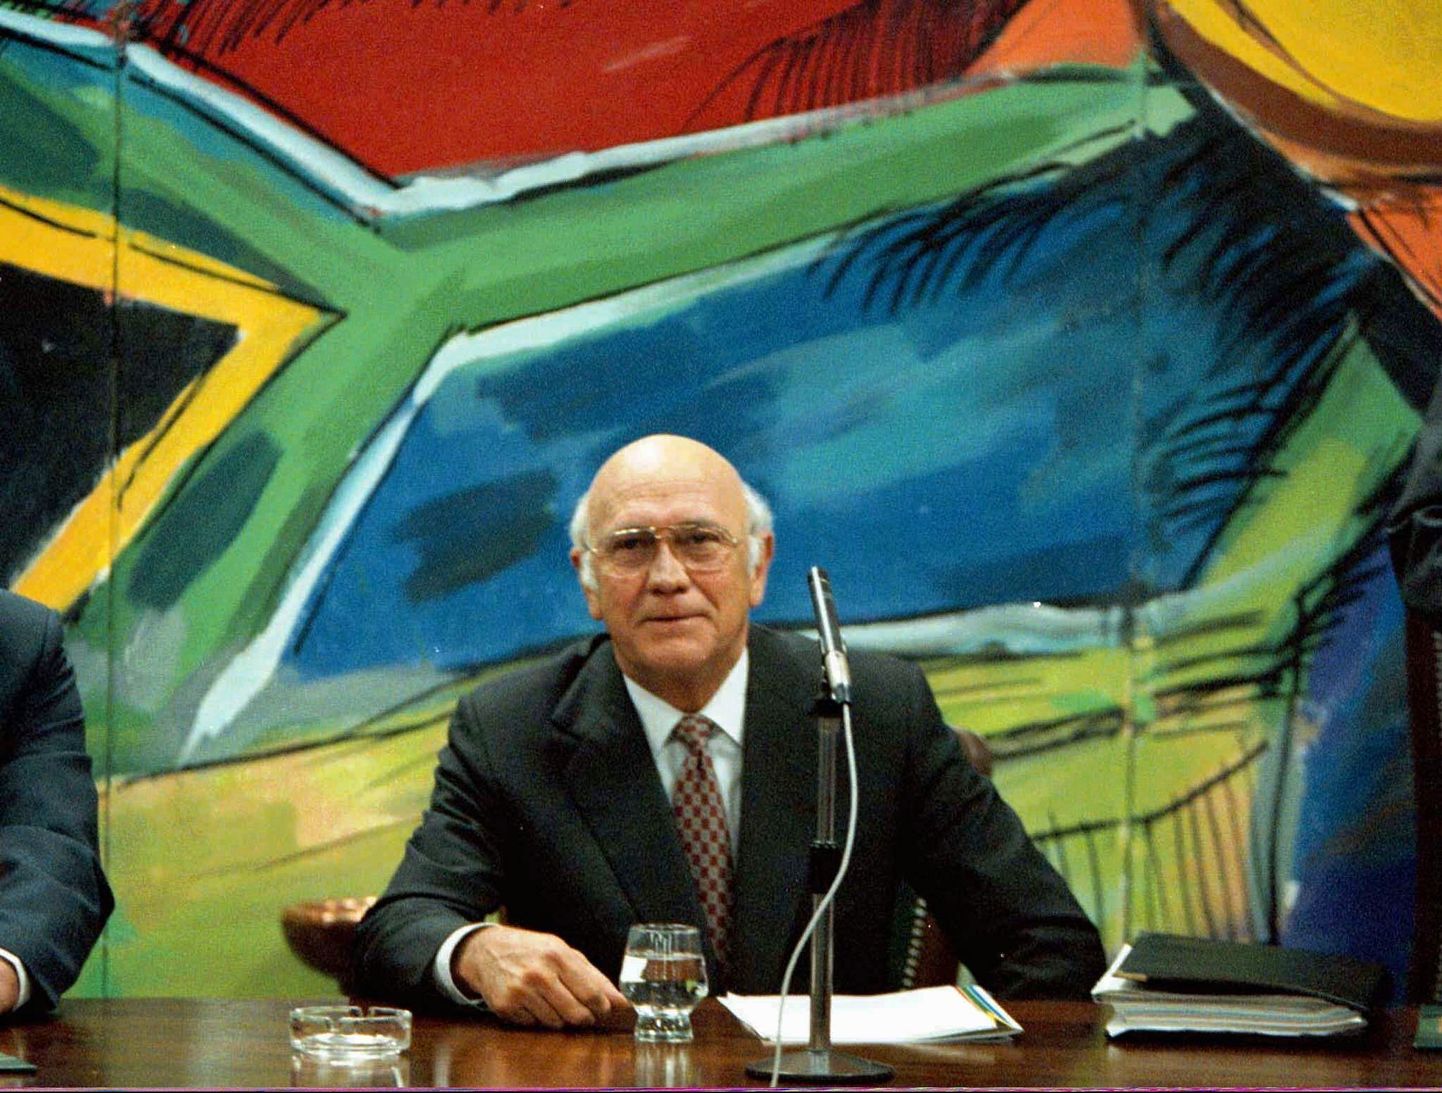 Lõuna-Aafrika endine president Frederik Willem de Klerk Kaplinnas 26. august 1997.